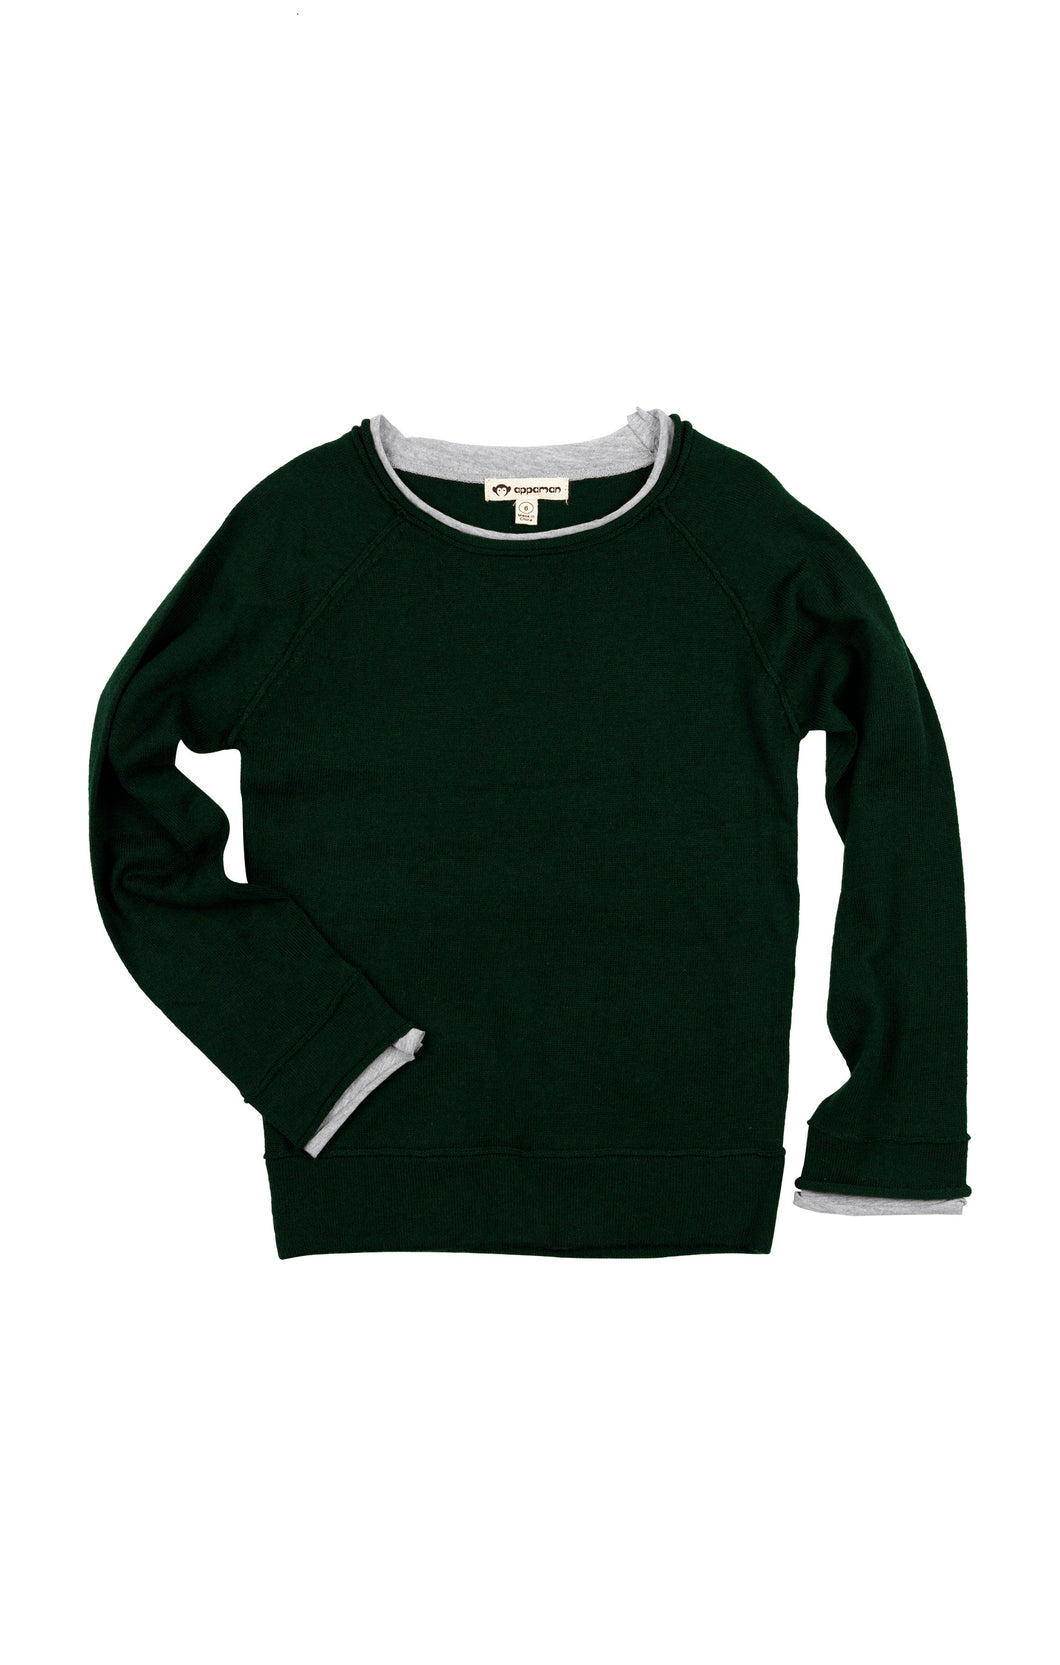 Jackson Roll Neck Sweater